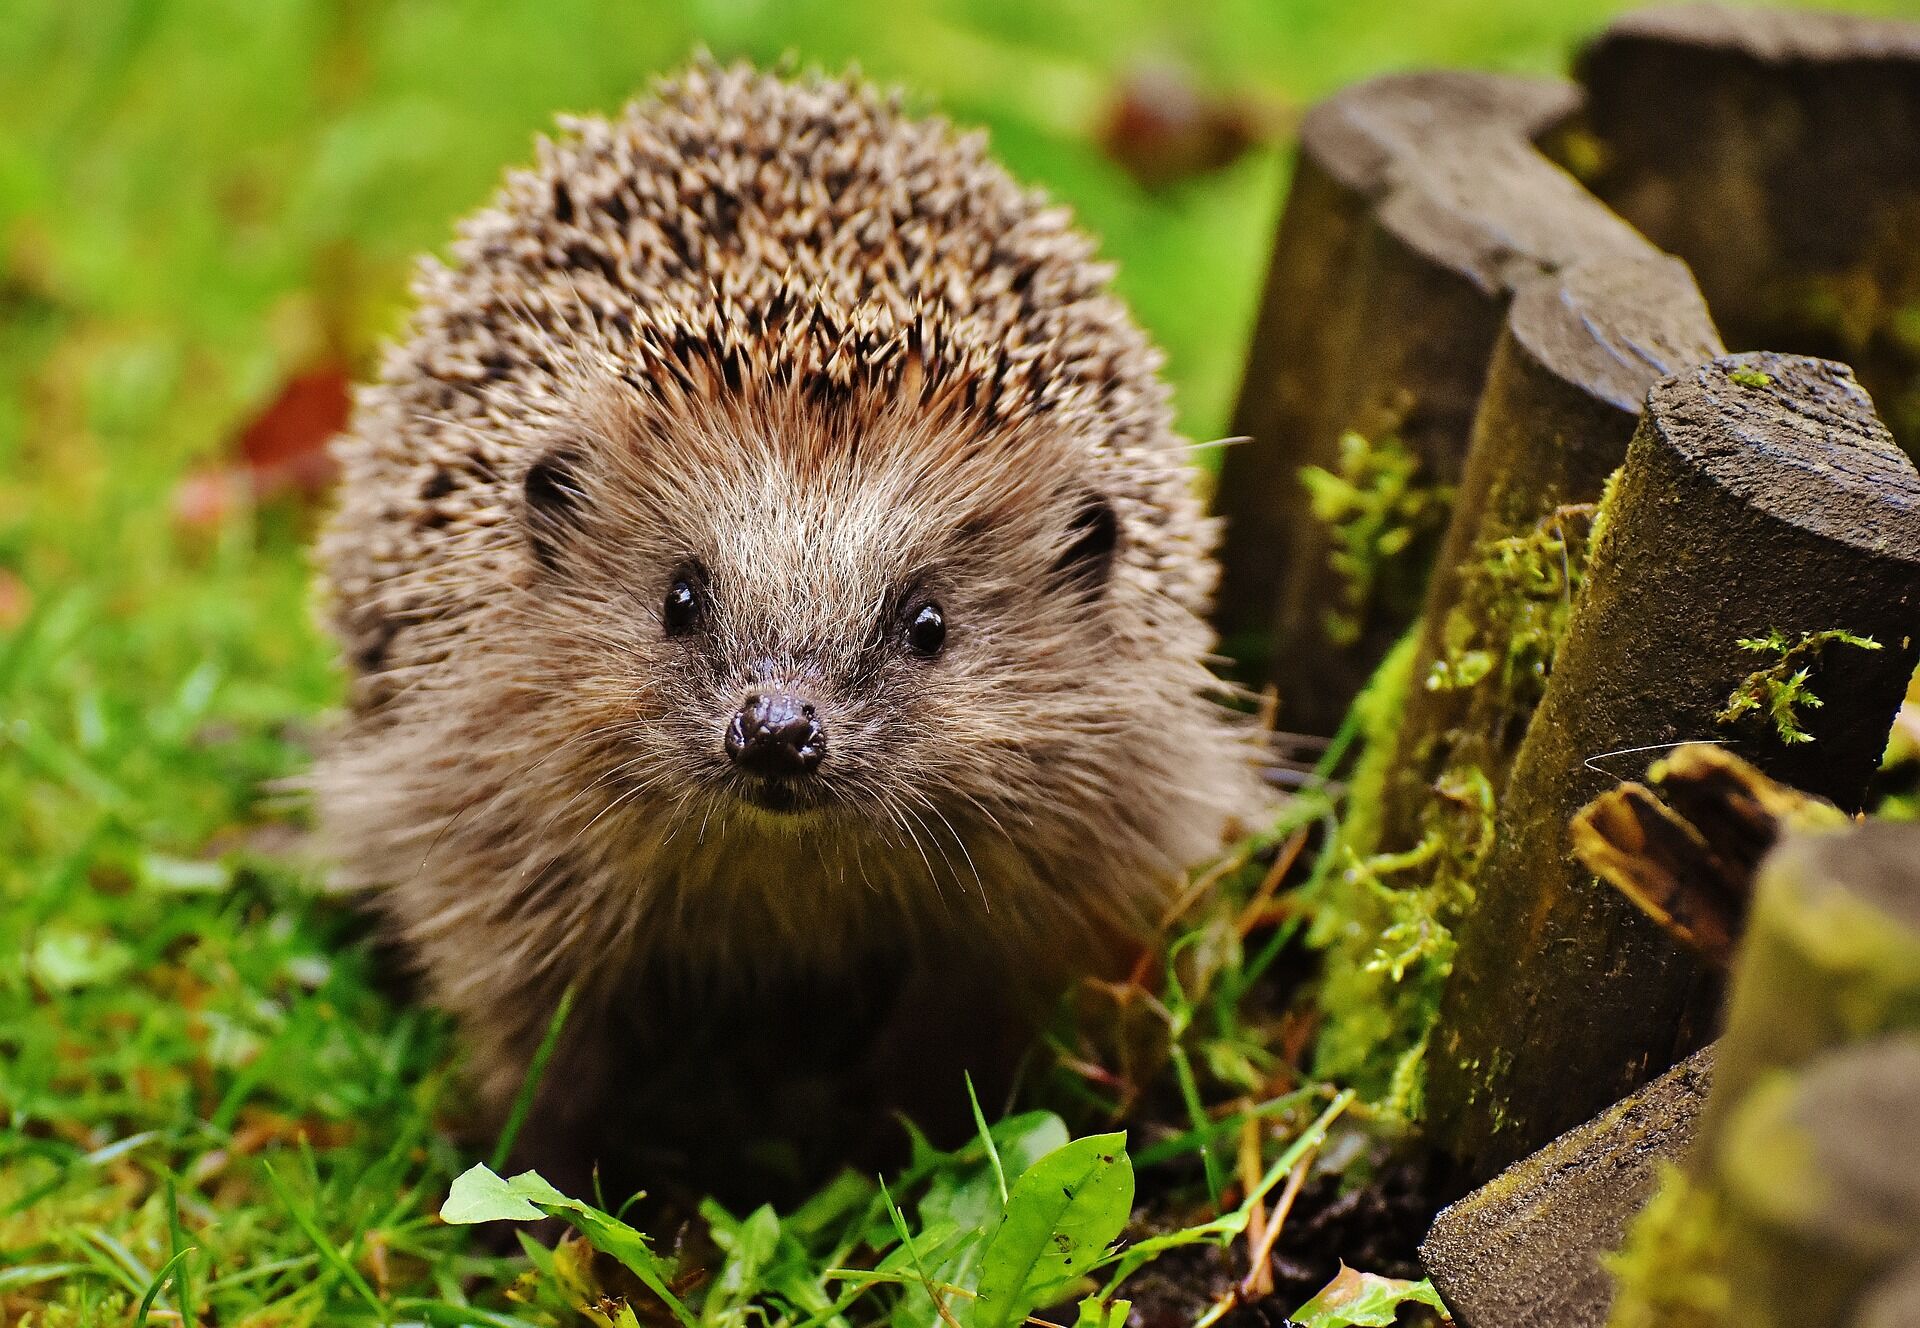 Close up of hedgehog on lawn staring at camera